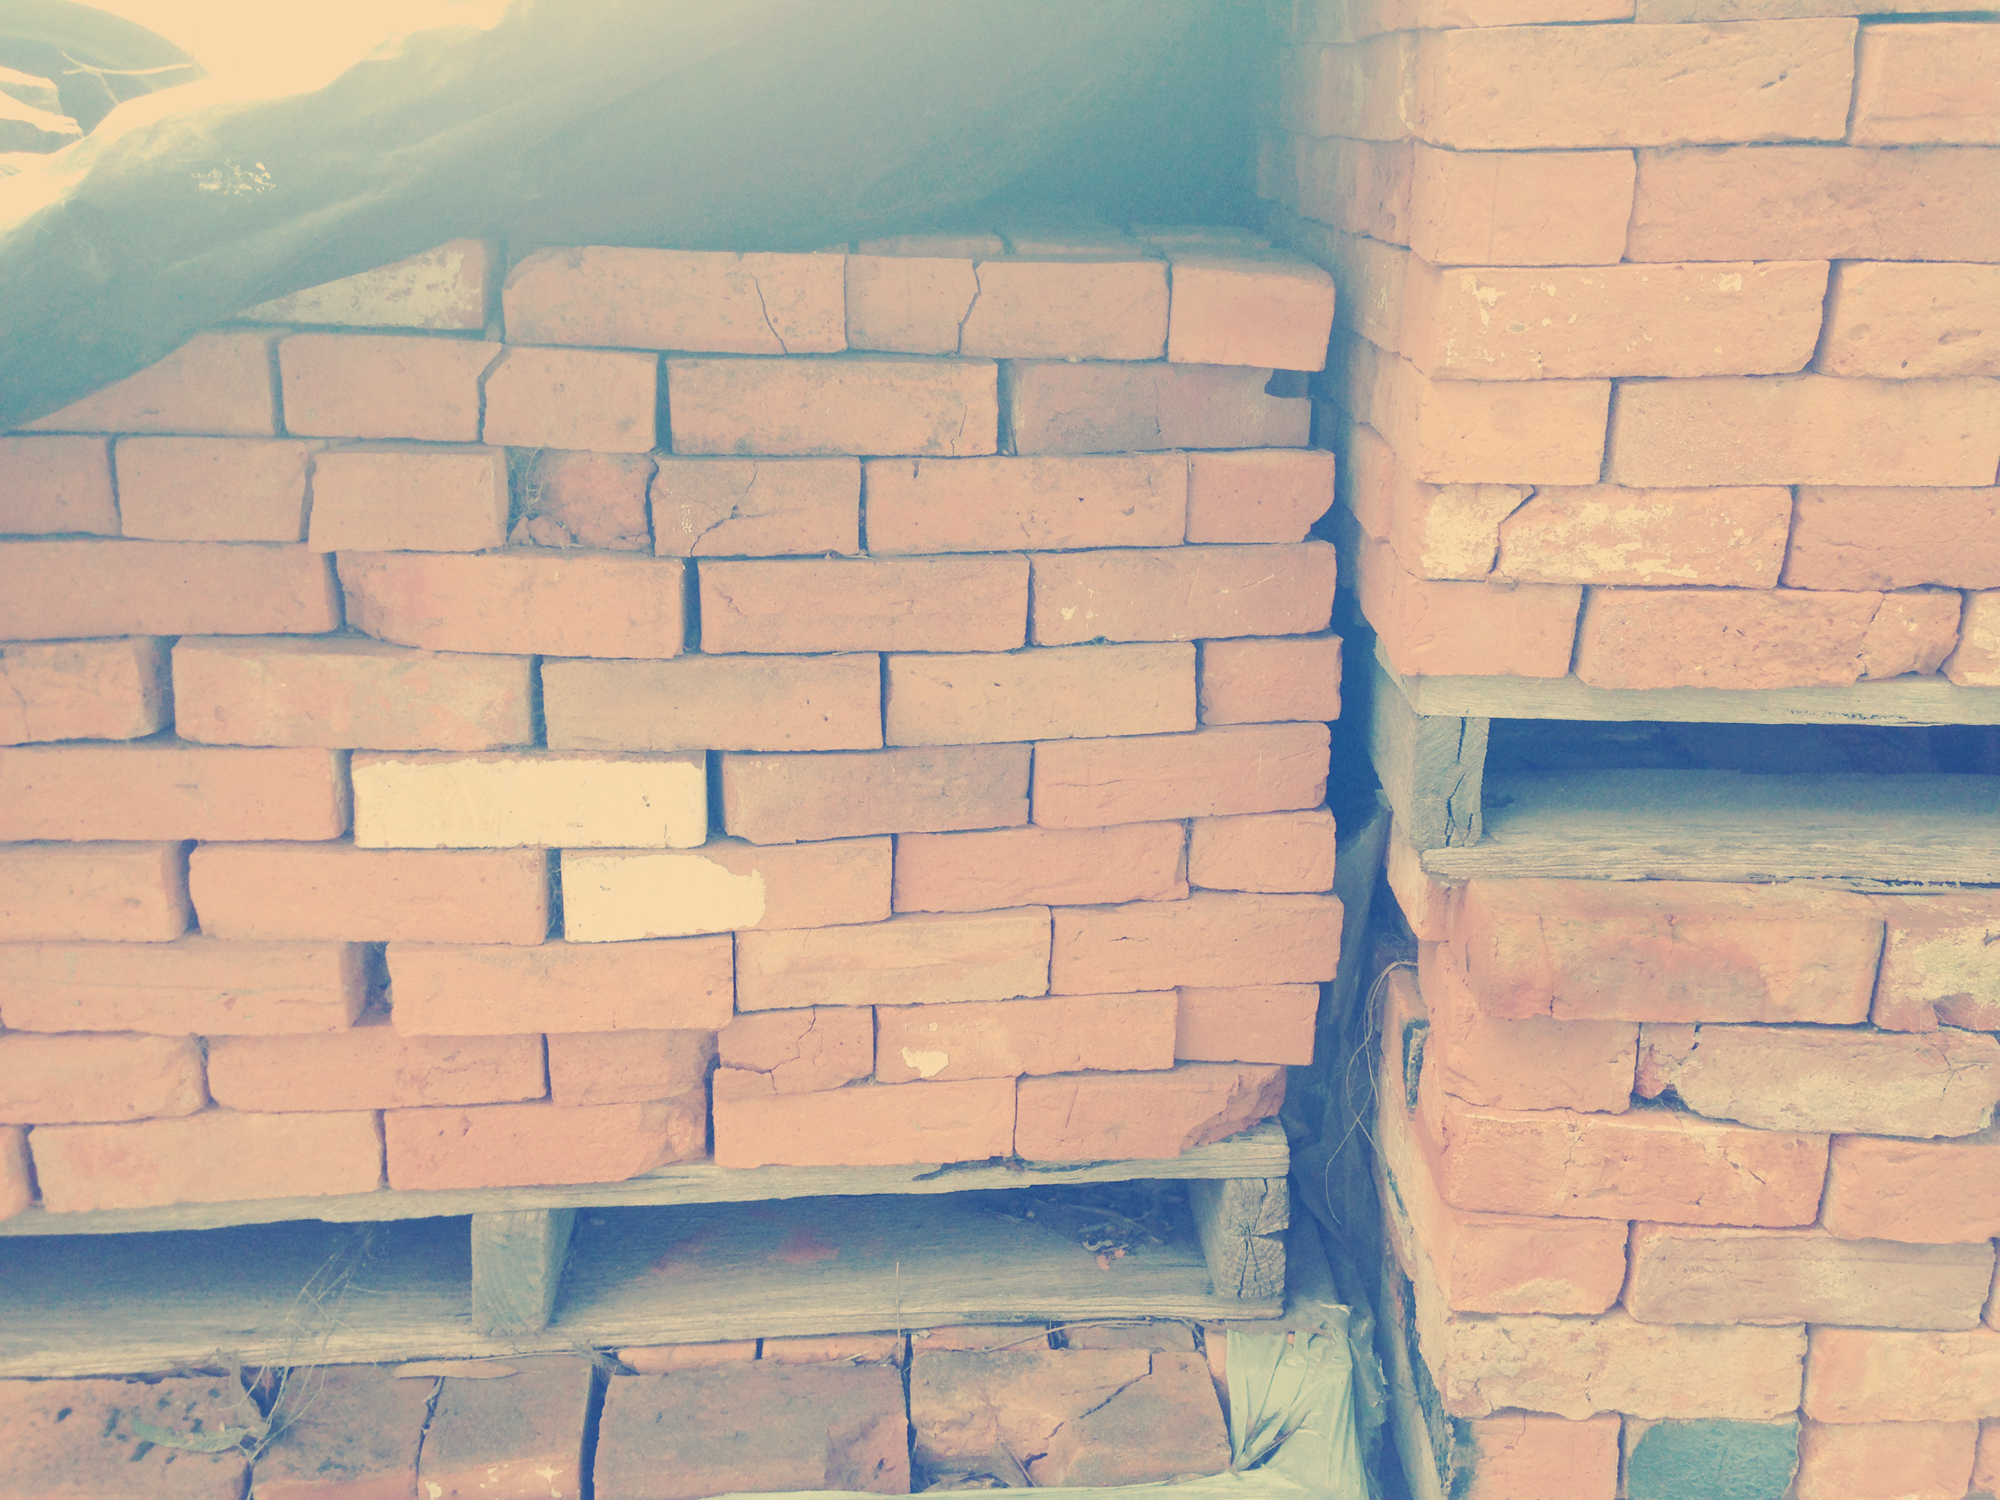 Murrindindi; Bricks; Pallets; Building